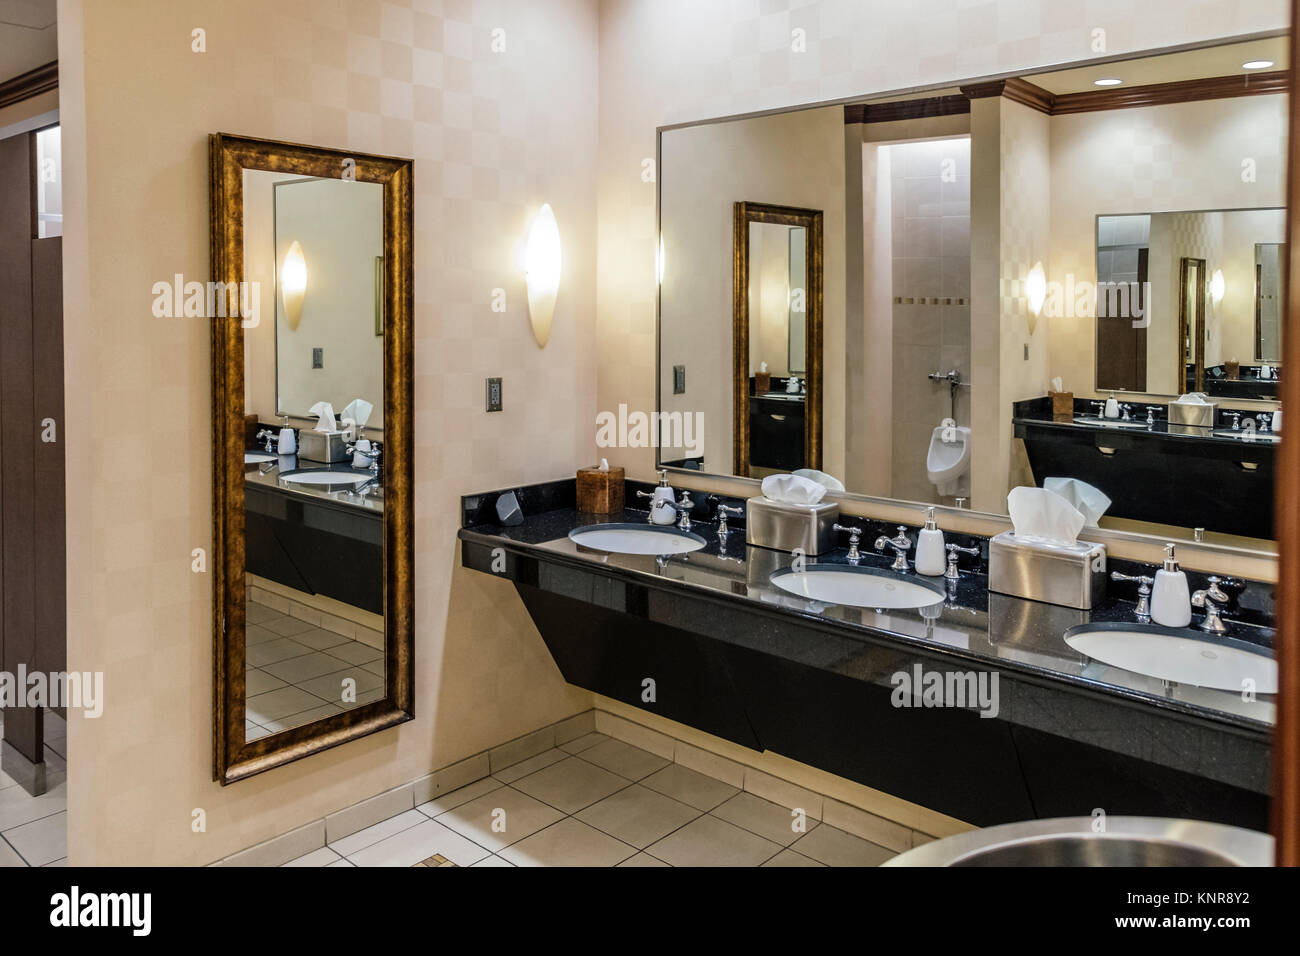 Interior Of Public Men S Bathroom Or Toilet In A Luxury Hotel The